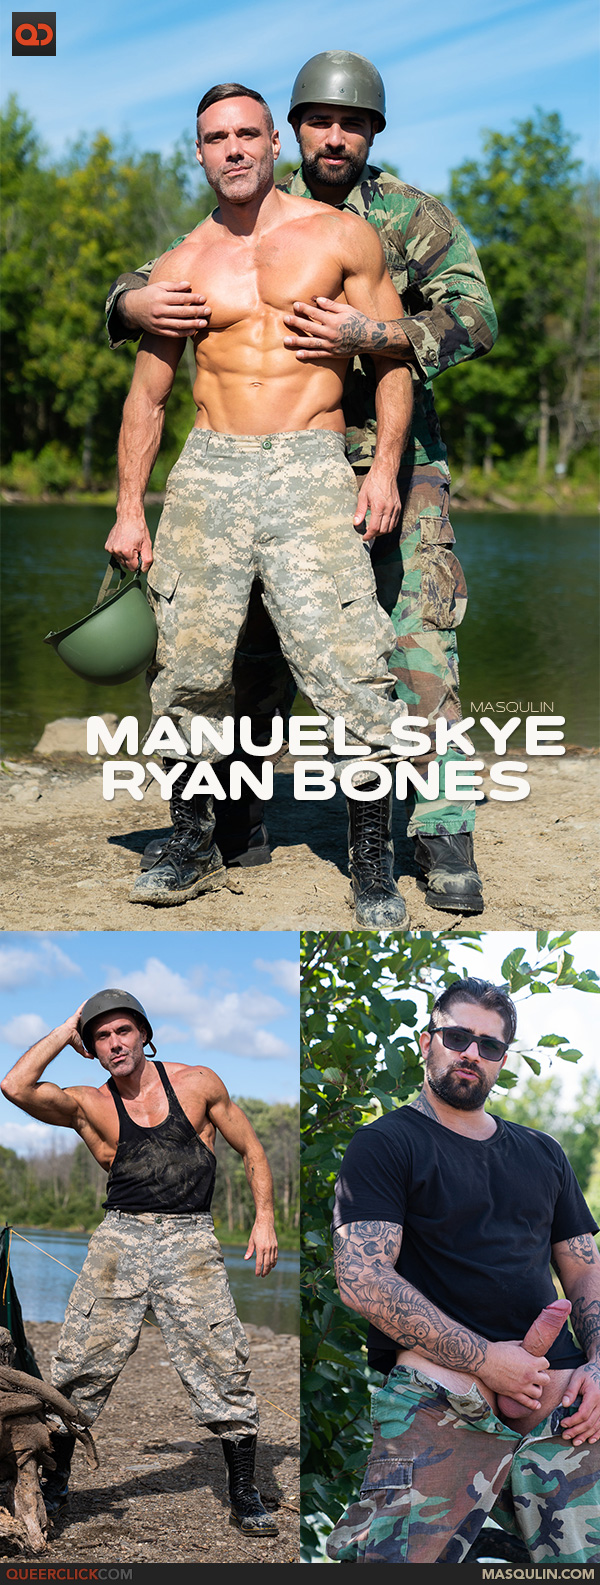 The Bro Network | Masqulin: Manuel Skye and Ryan Bones